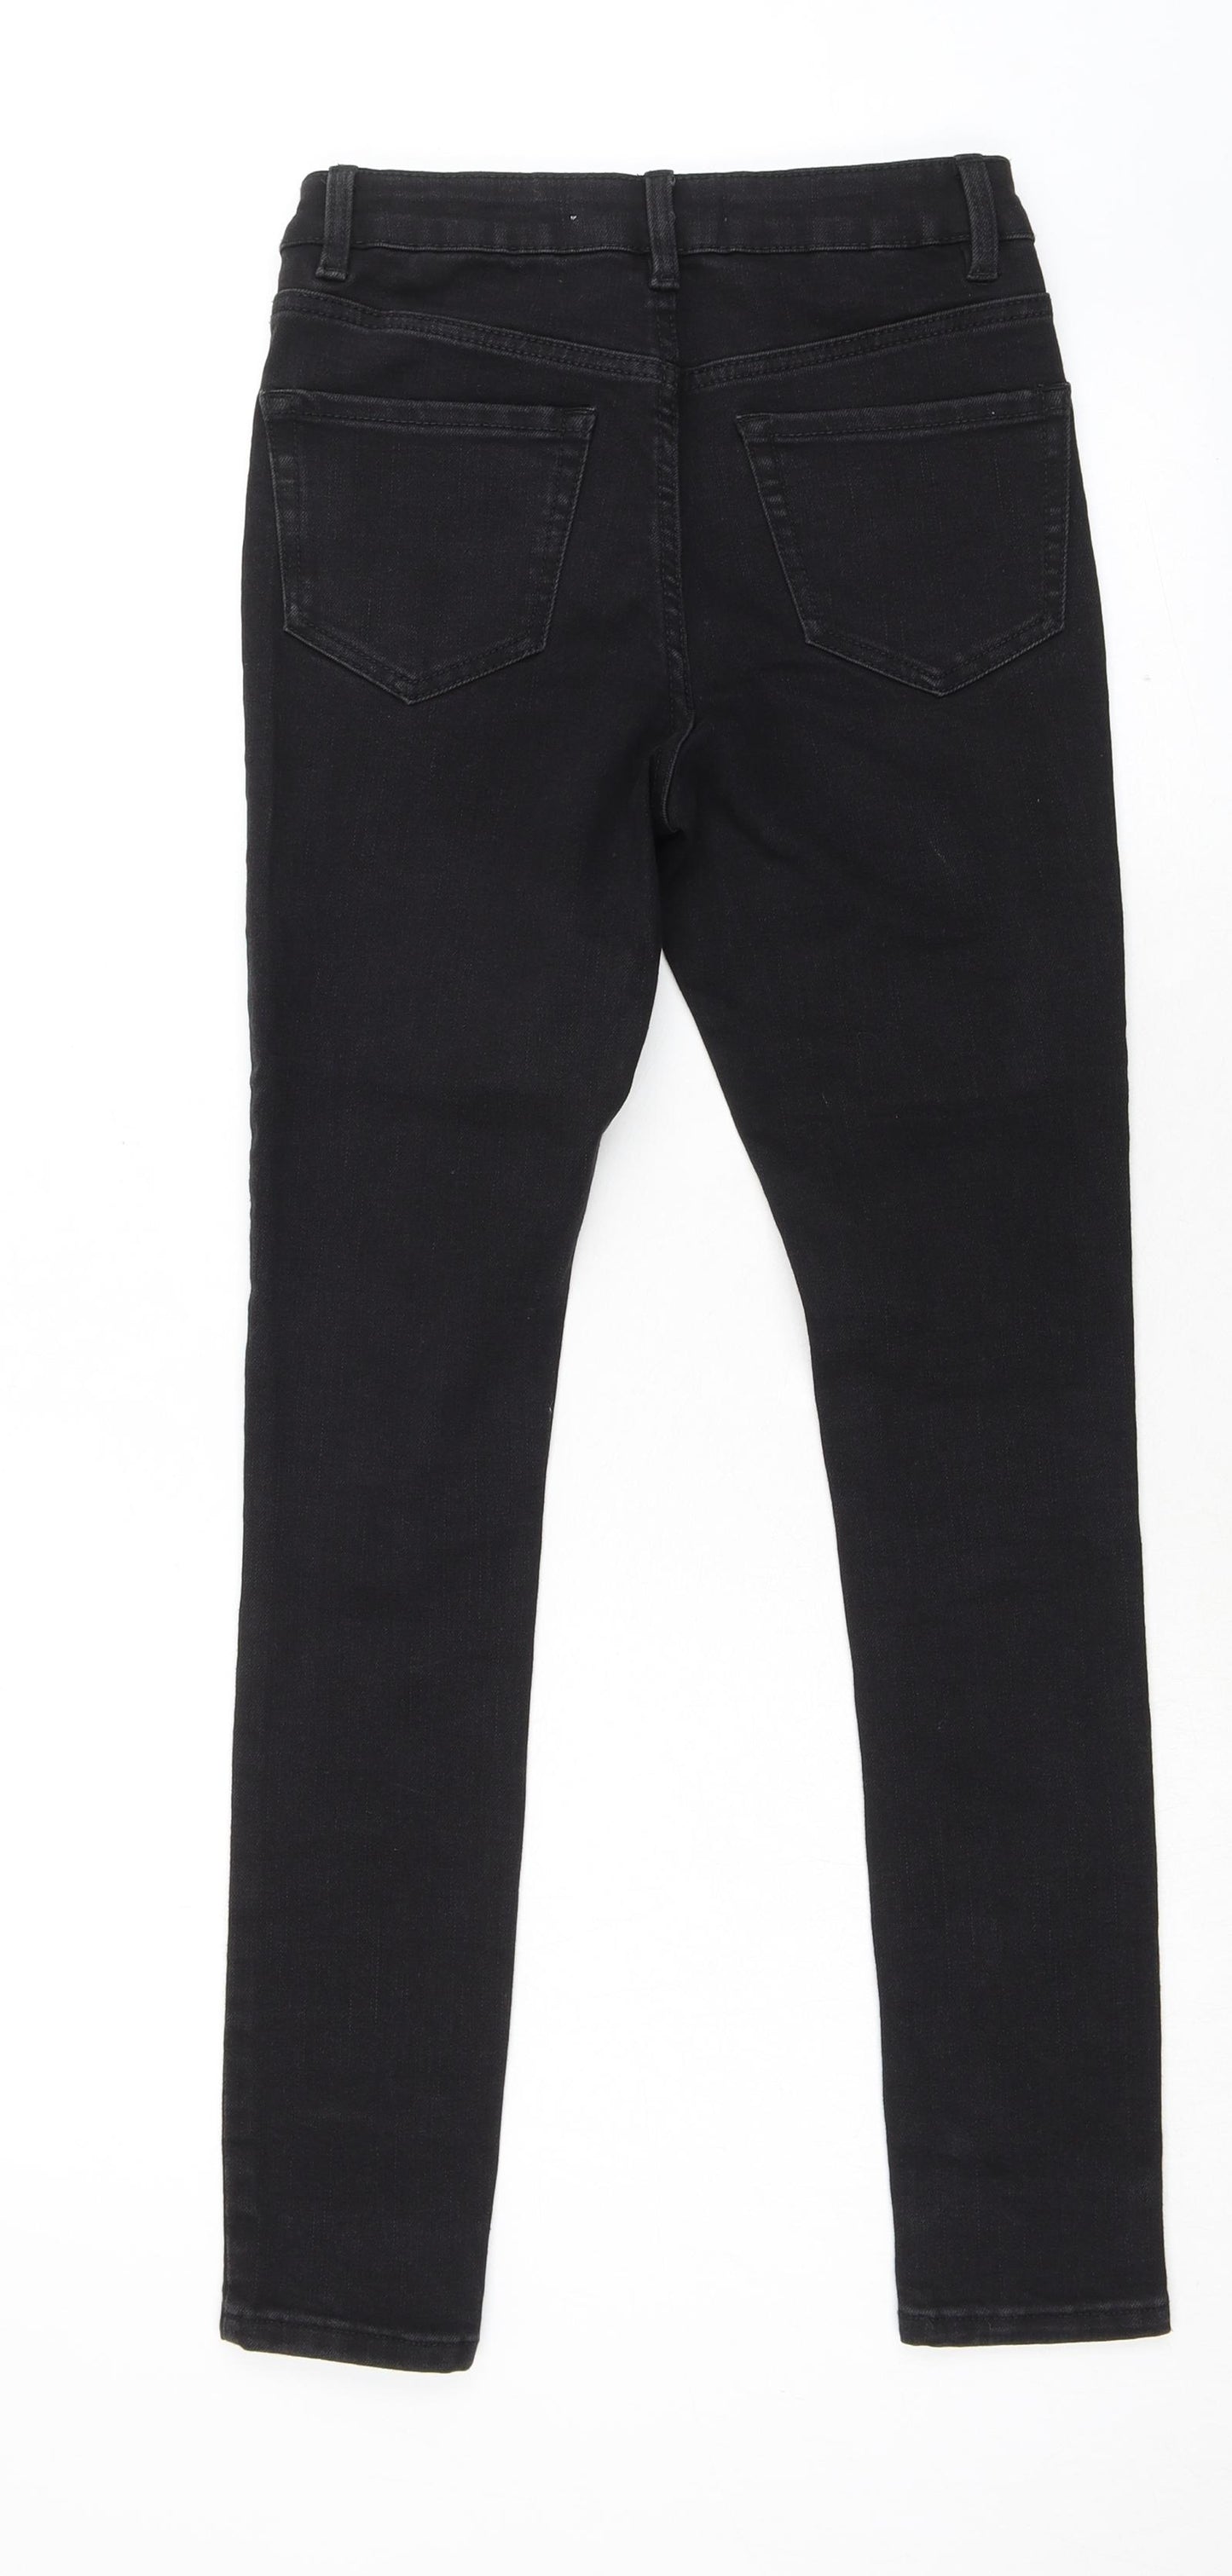 George Womens Black Cotton Skinny Jeans Size 8 L29 in Slim Zip